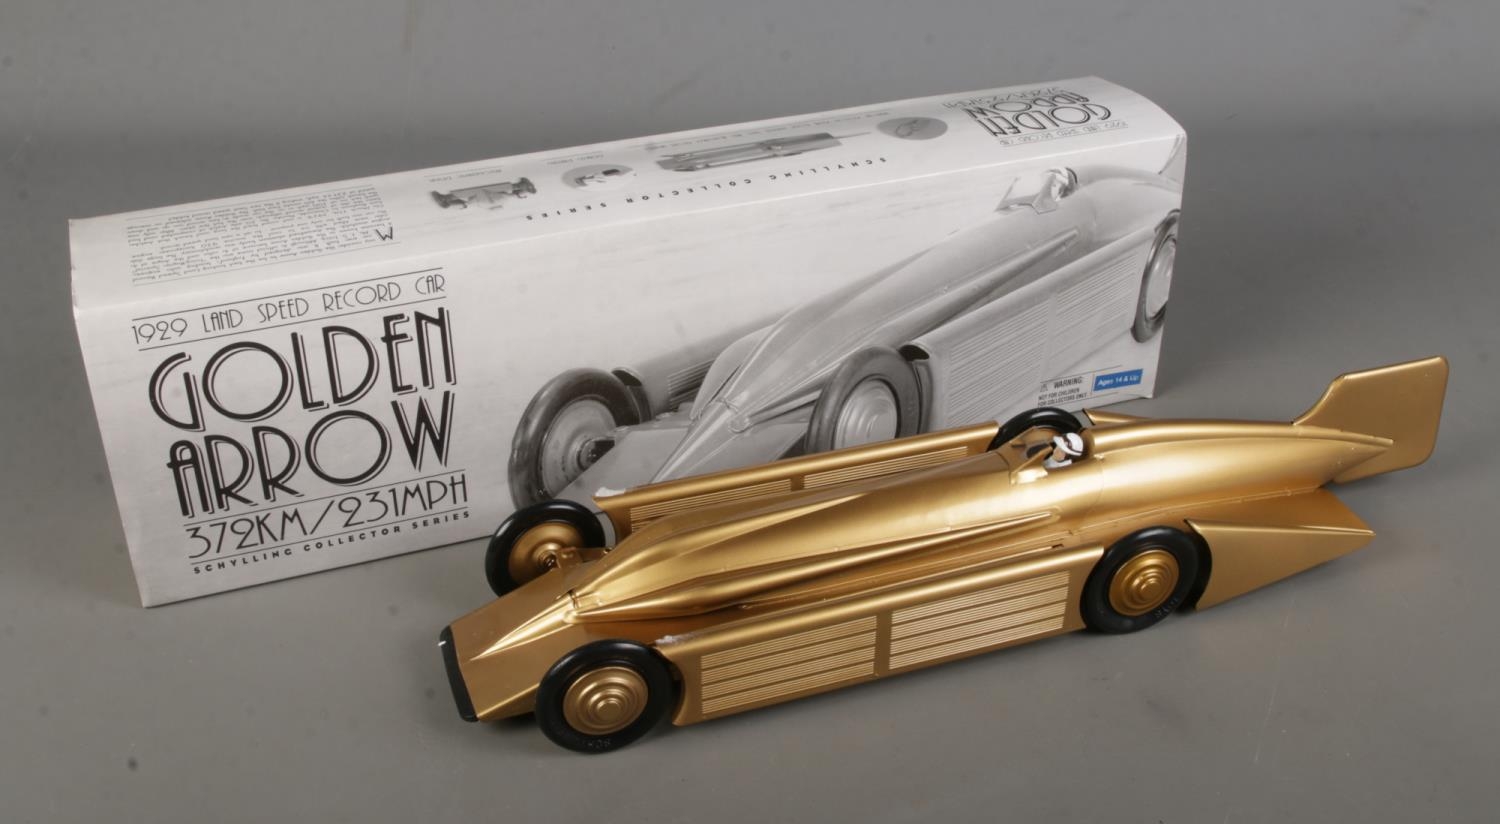 A Schylling Collector Series Golden Arrow, in original box, 1929 Land Speed Record Car